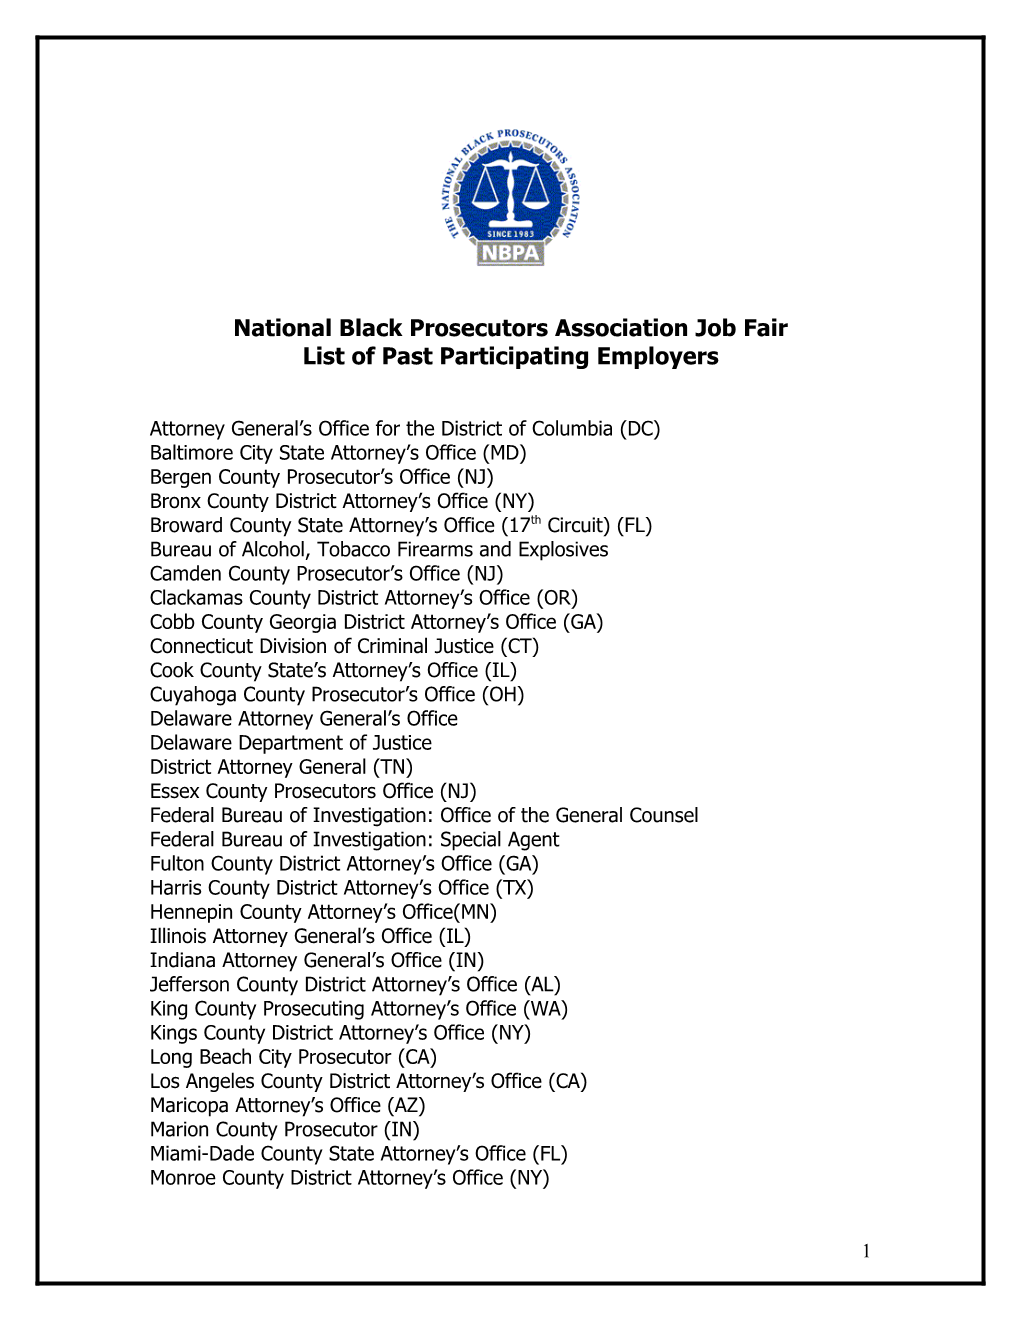 NBPA 2005 Job Fair- List of Participating Employers